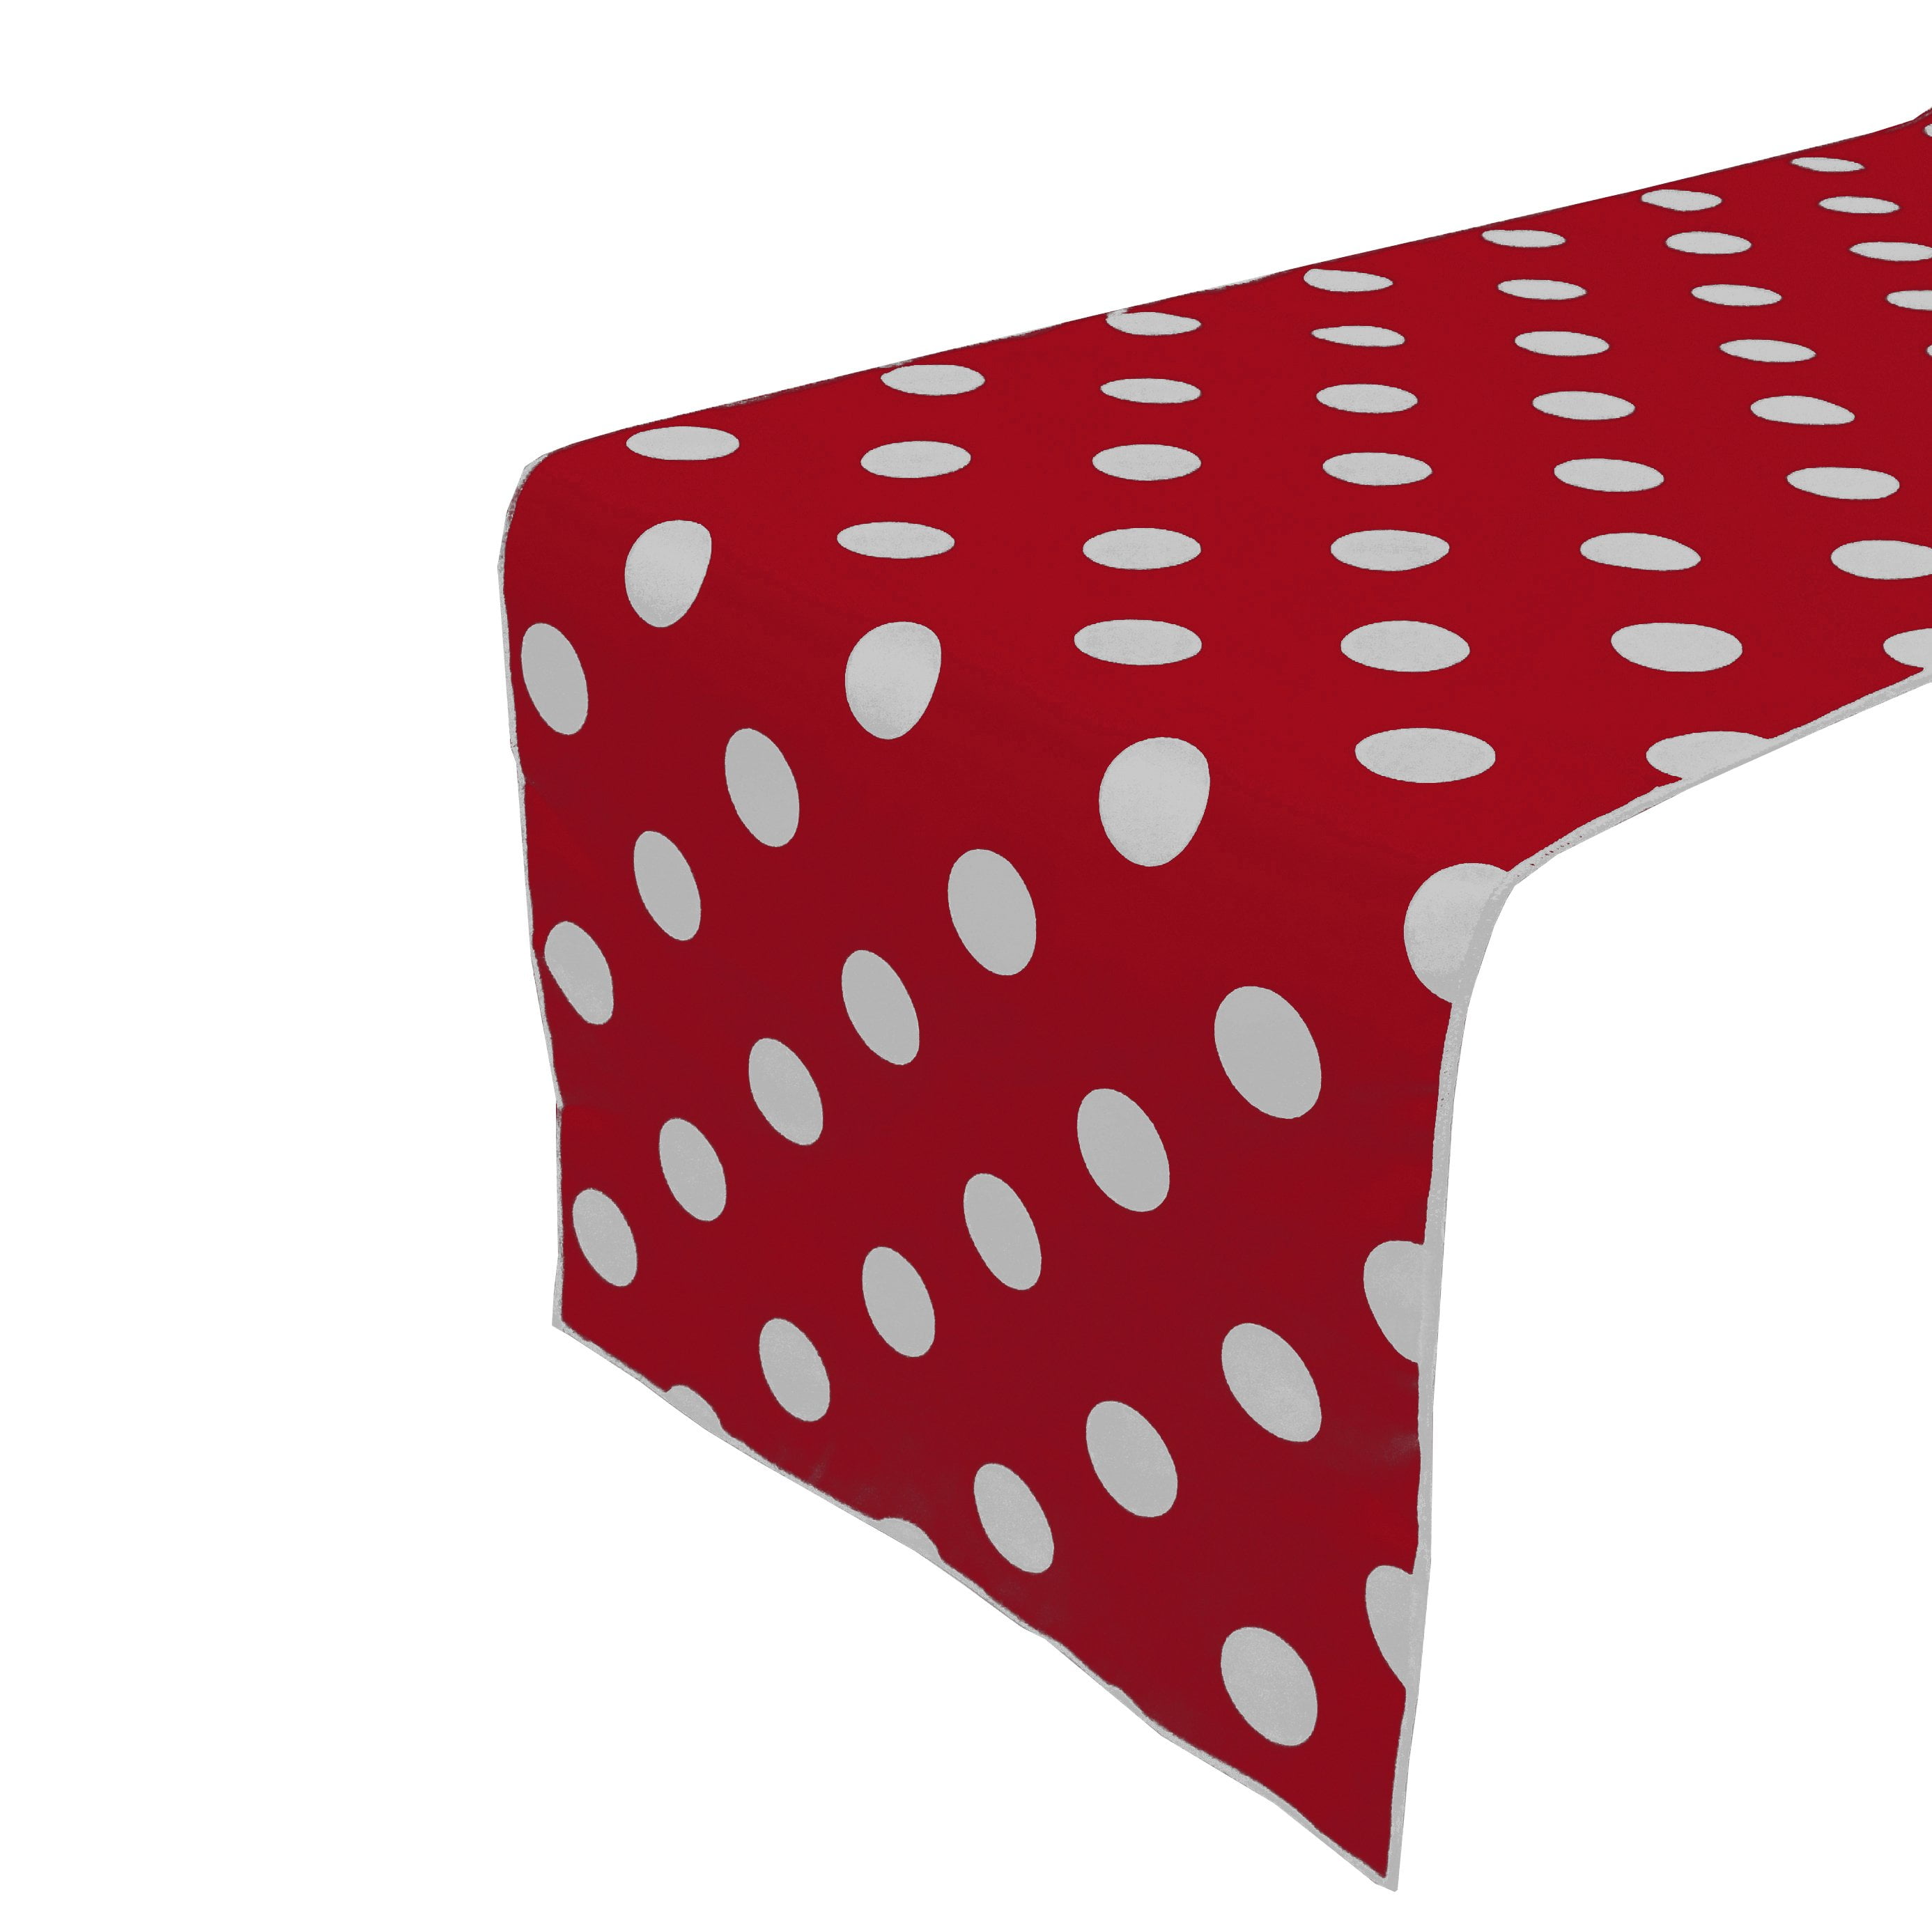 Zen Creative Designs Premium Cotton Table Top Runner Polka Dots Spots 